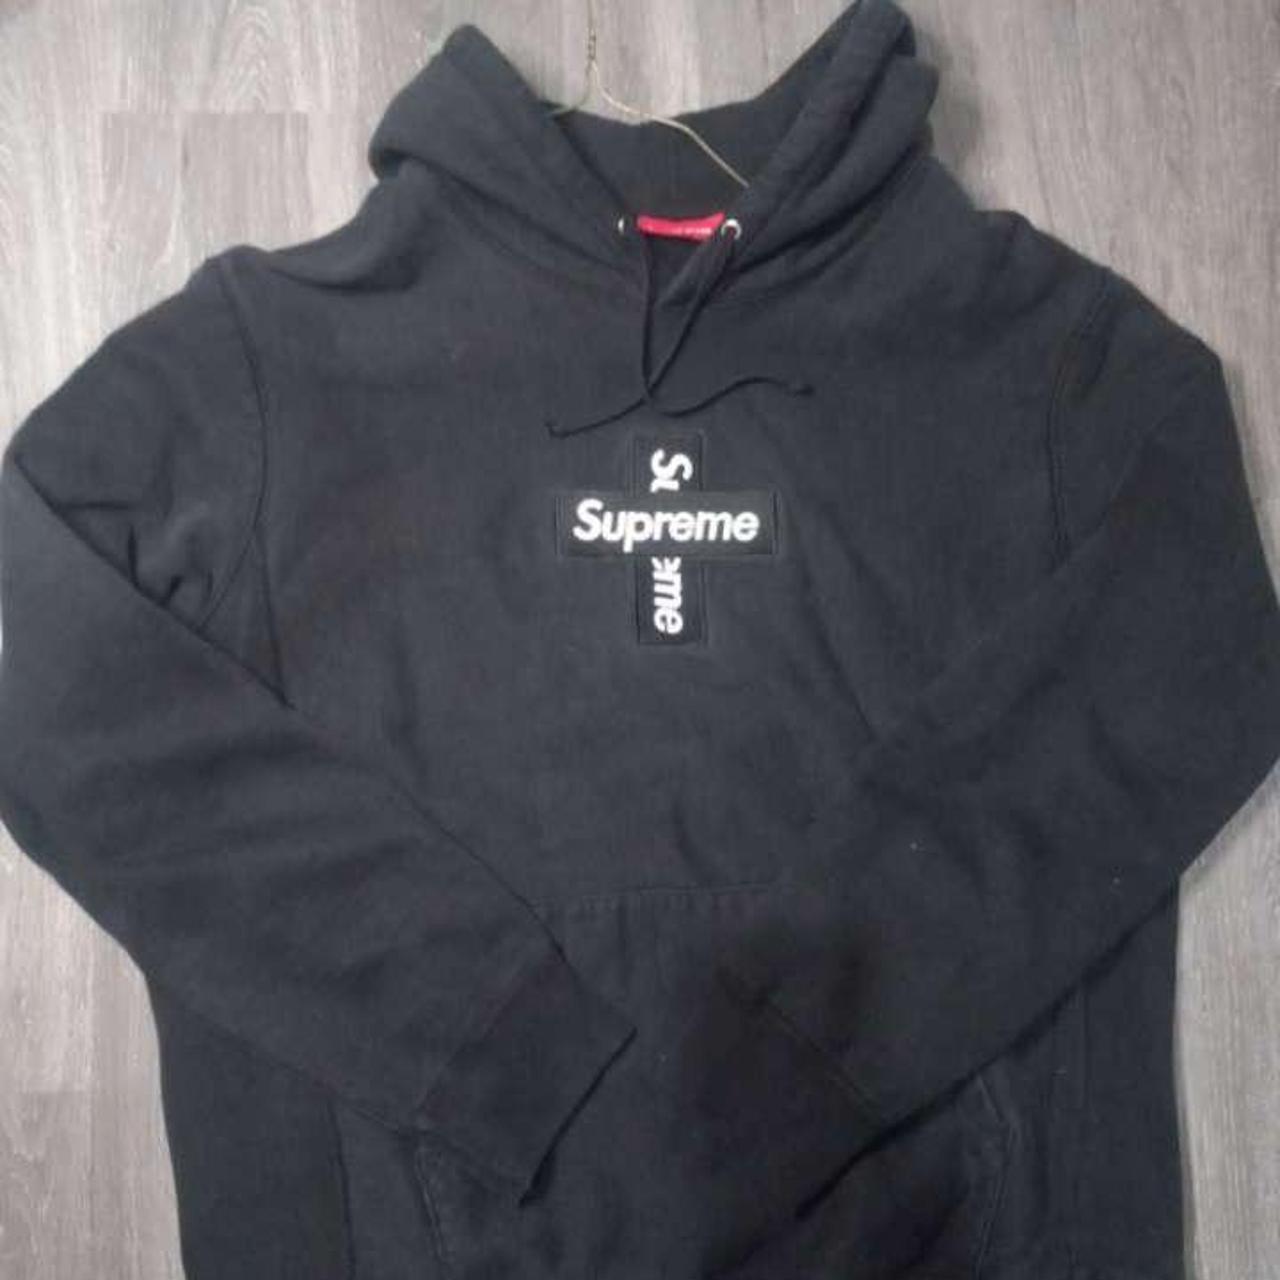 Supreme cross box logo hoodie. 8/10 condition, no... - Depop